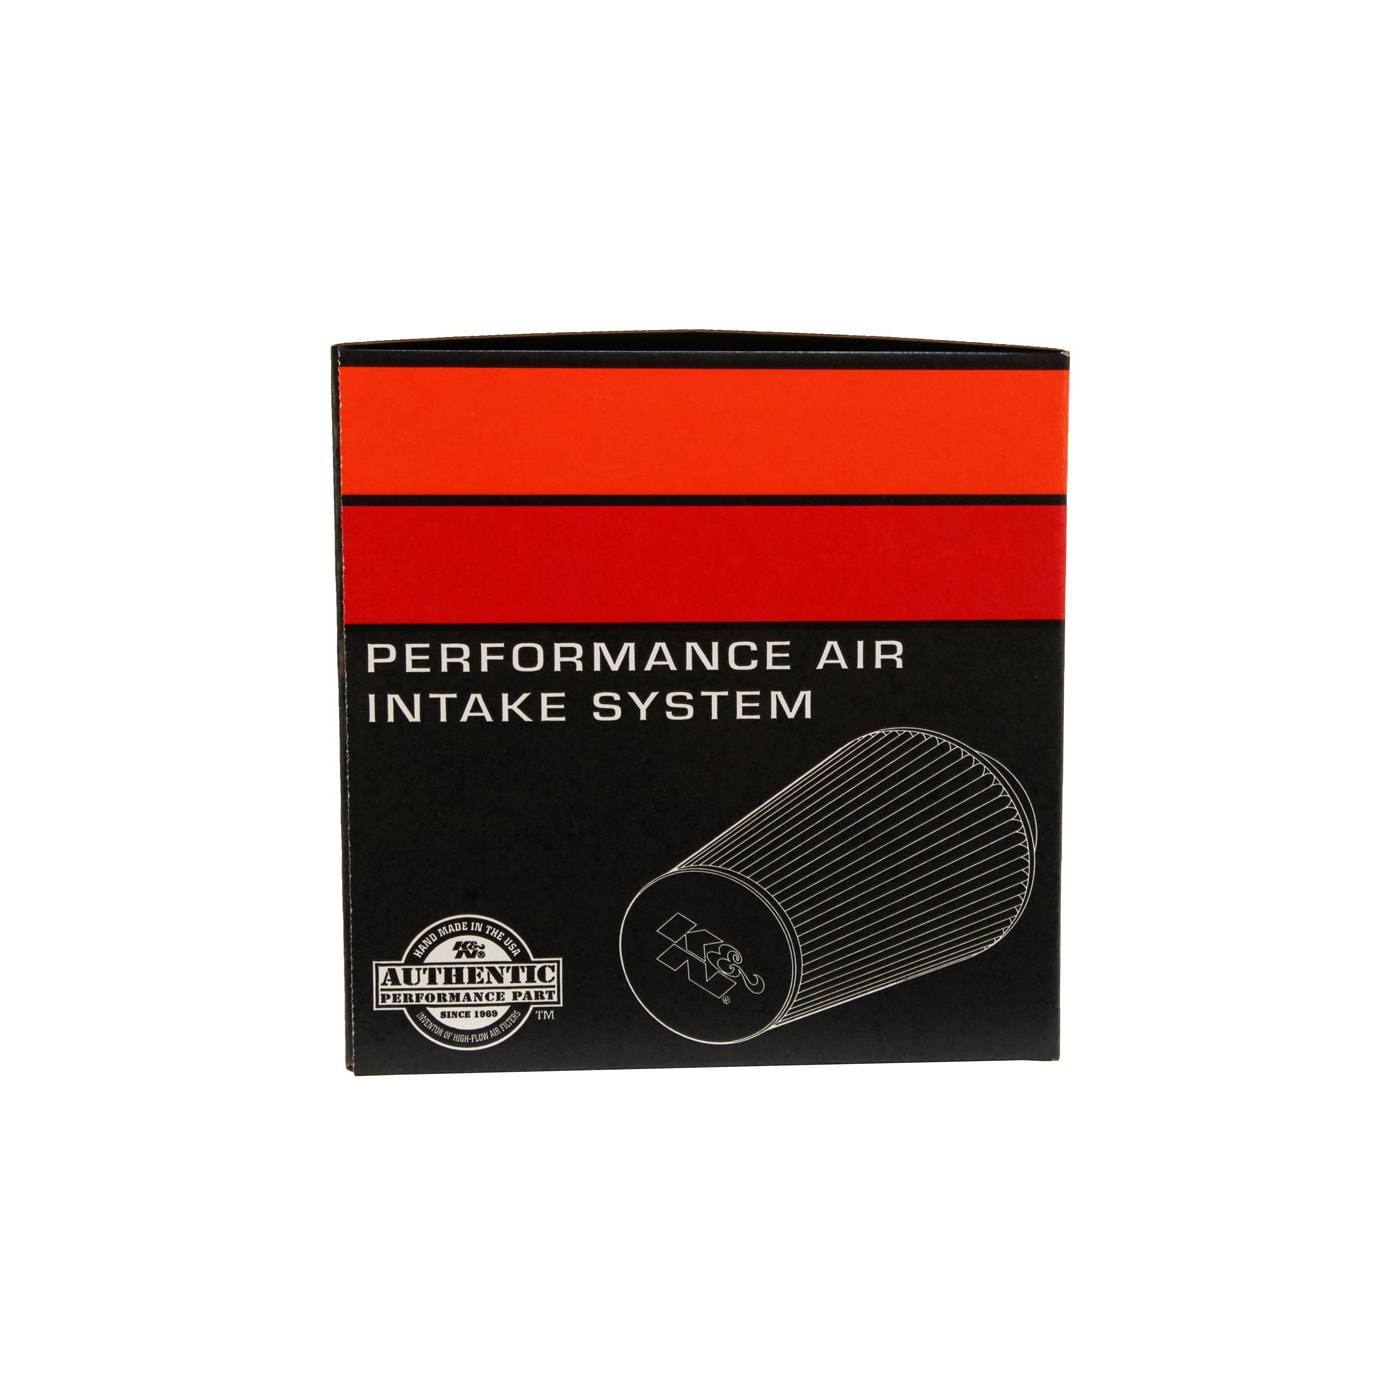 Performance Air Intake System